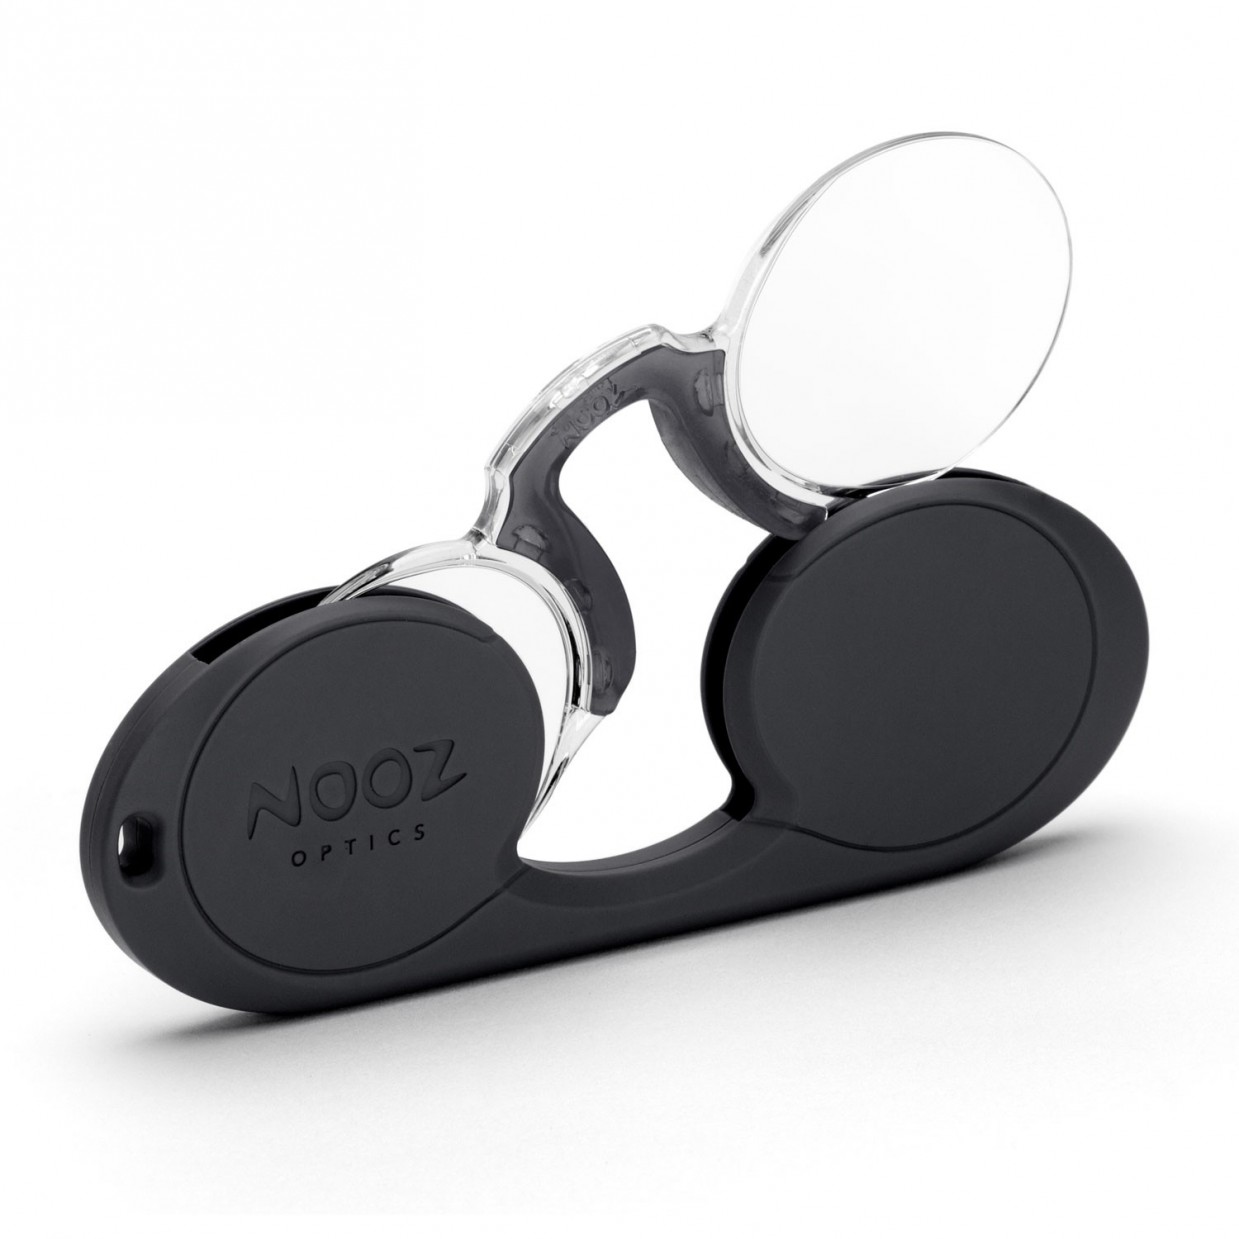 An image of Nooz Optics Oval Reading Glasses - Black +2